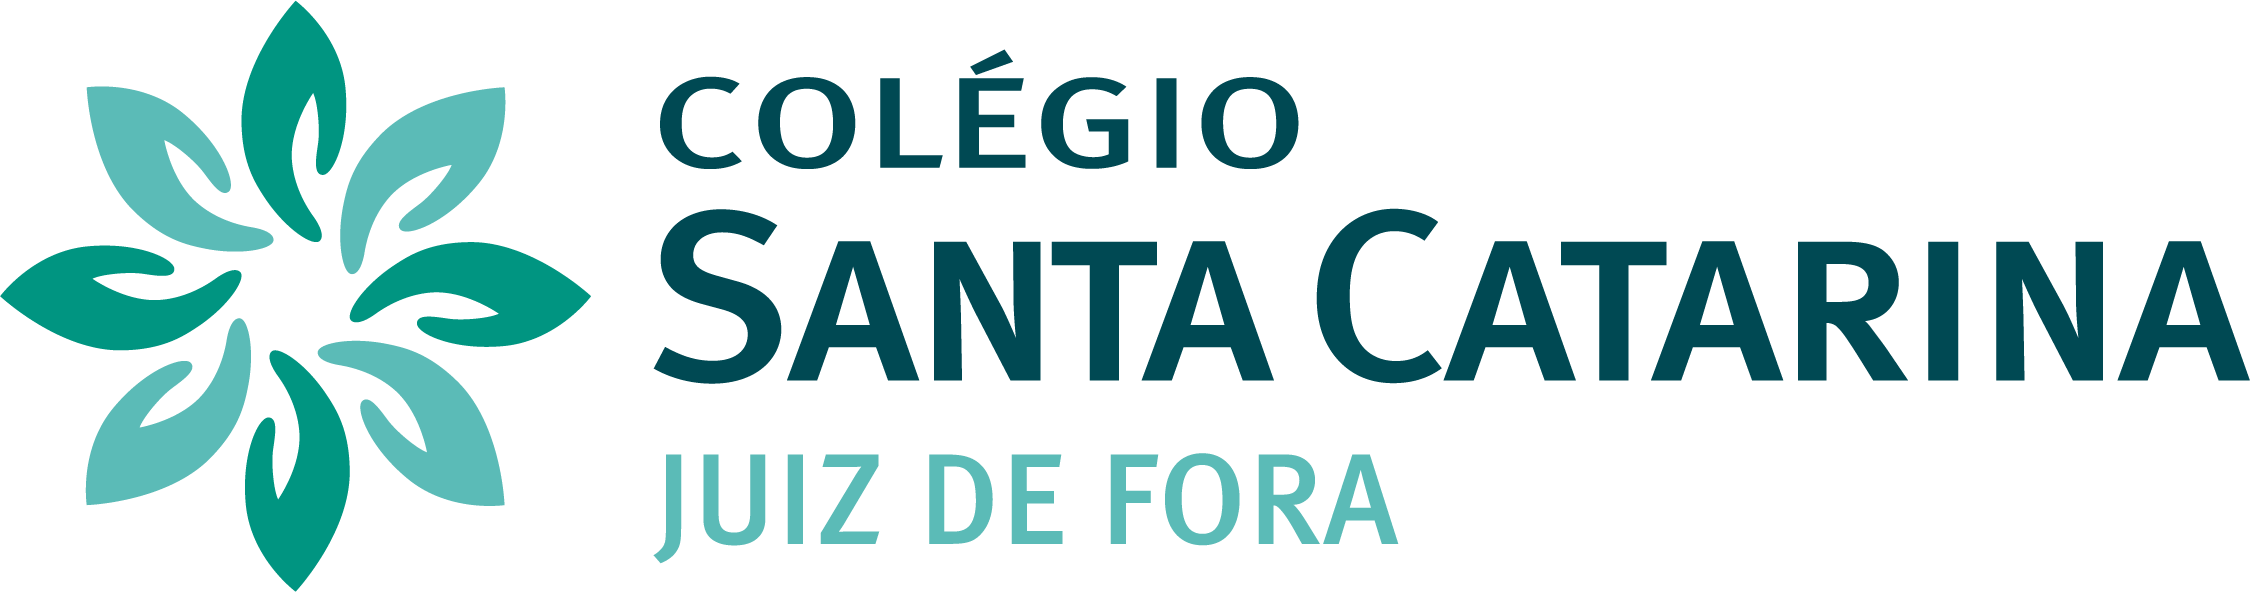 Colégio Santa Catarina (MG)